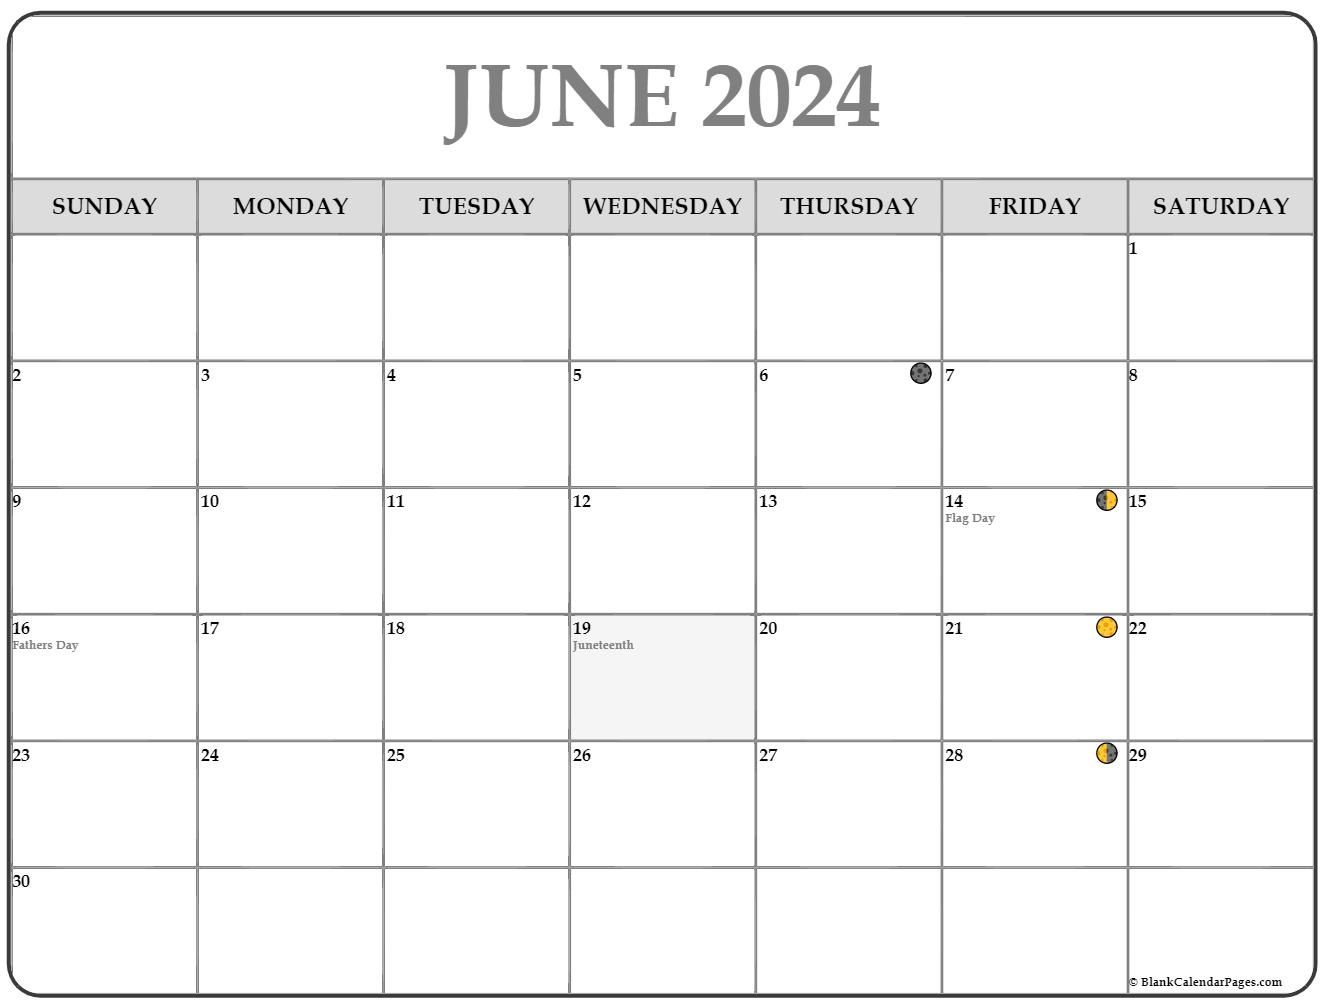 June 2024 Lunar Calendar | Moon Phase Calendar with regard to June 2024 Moon Calendar